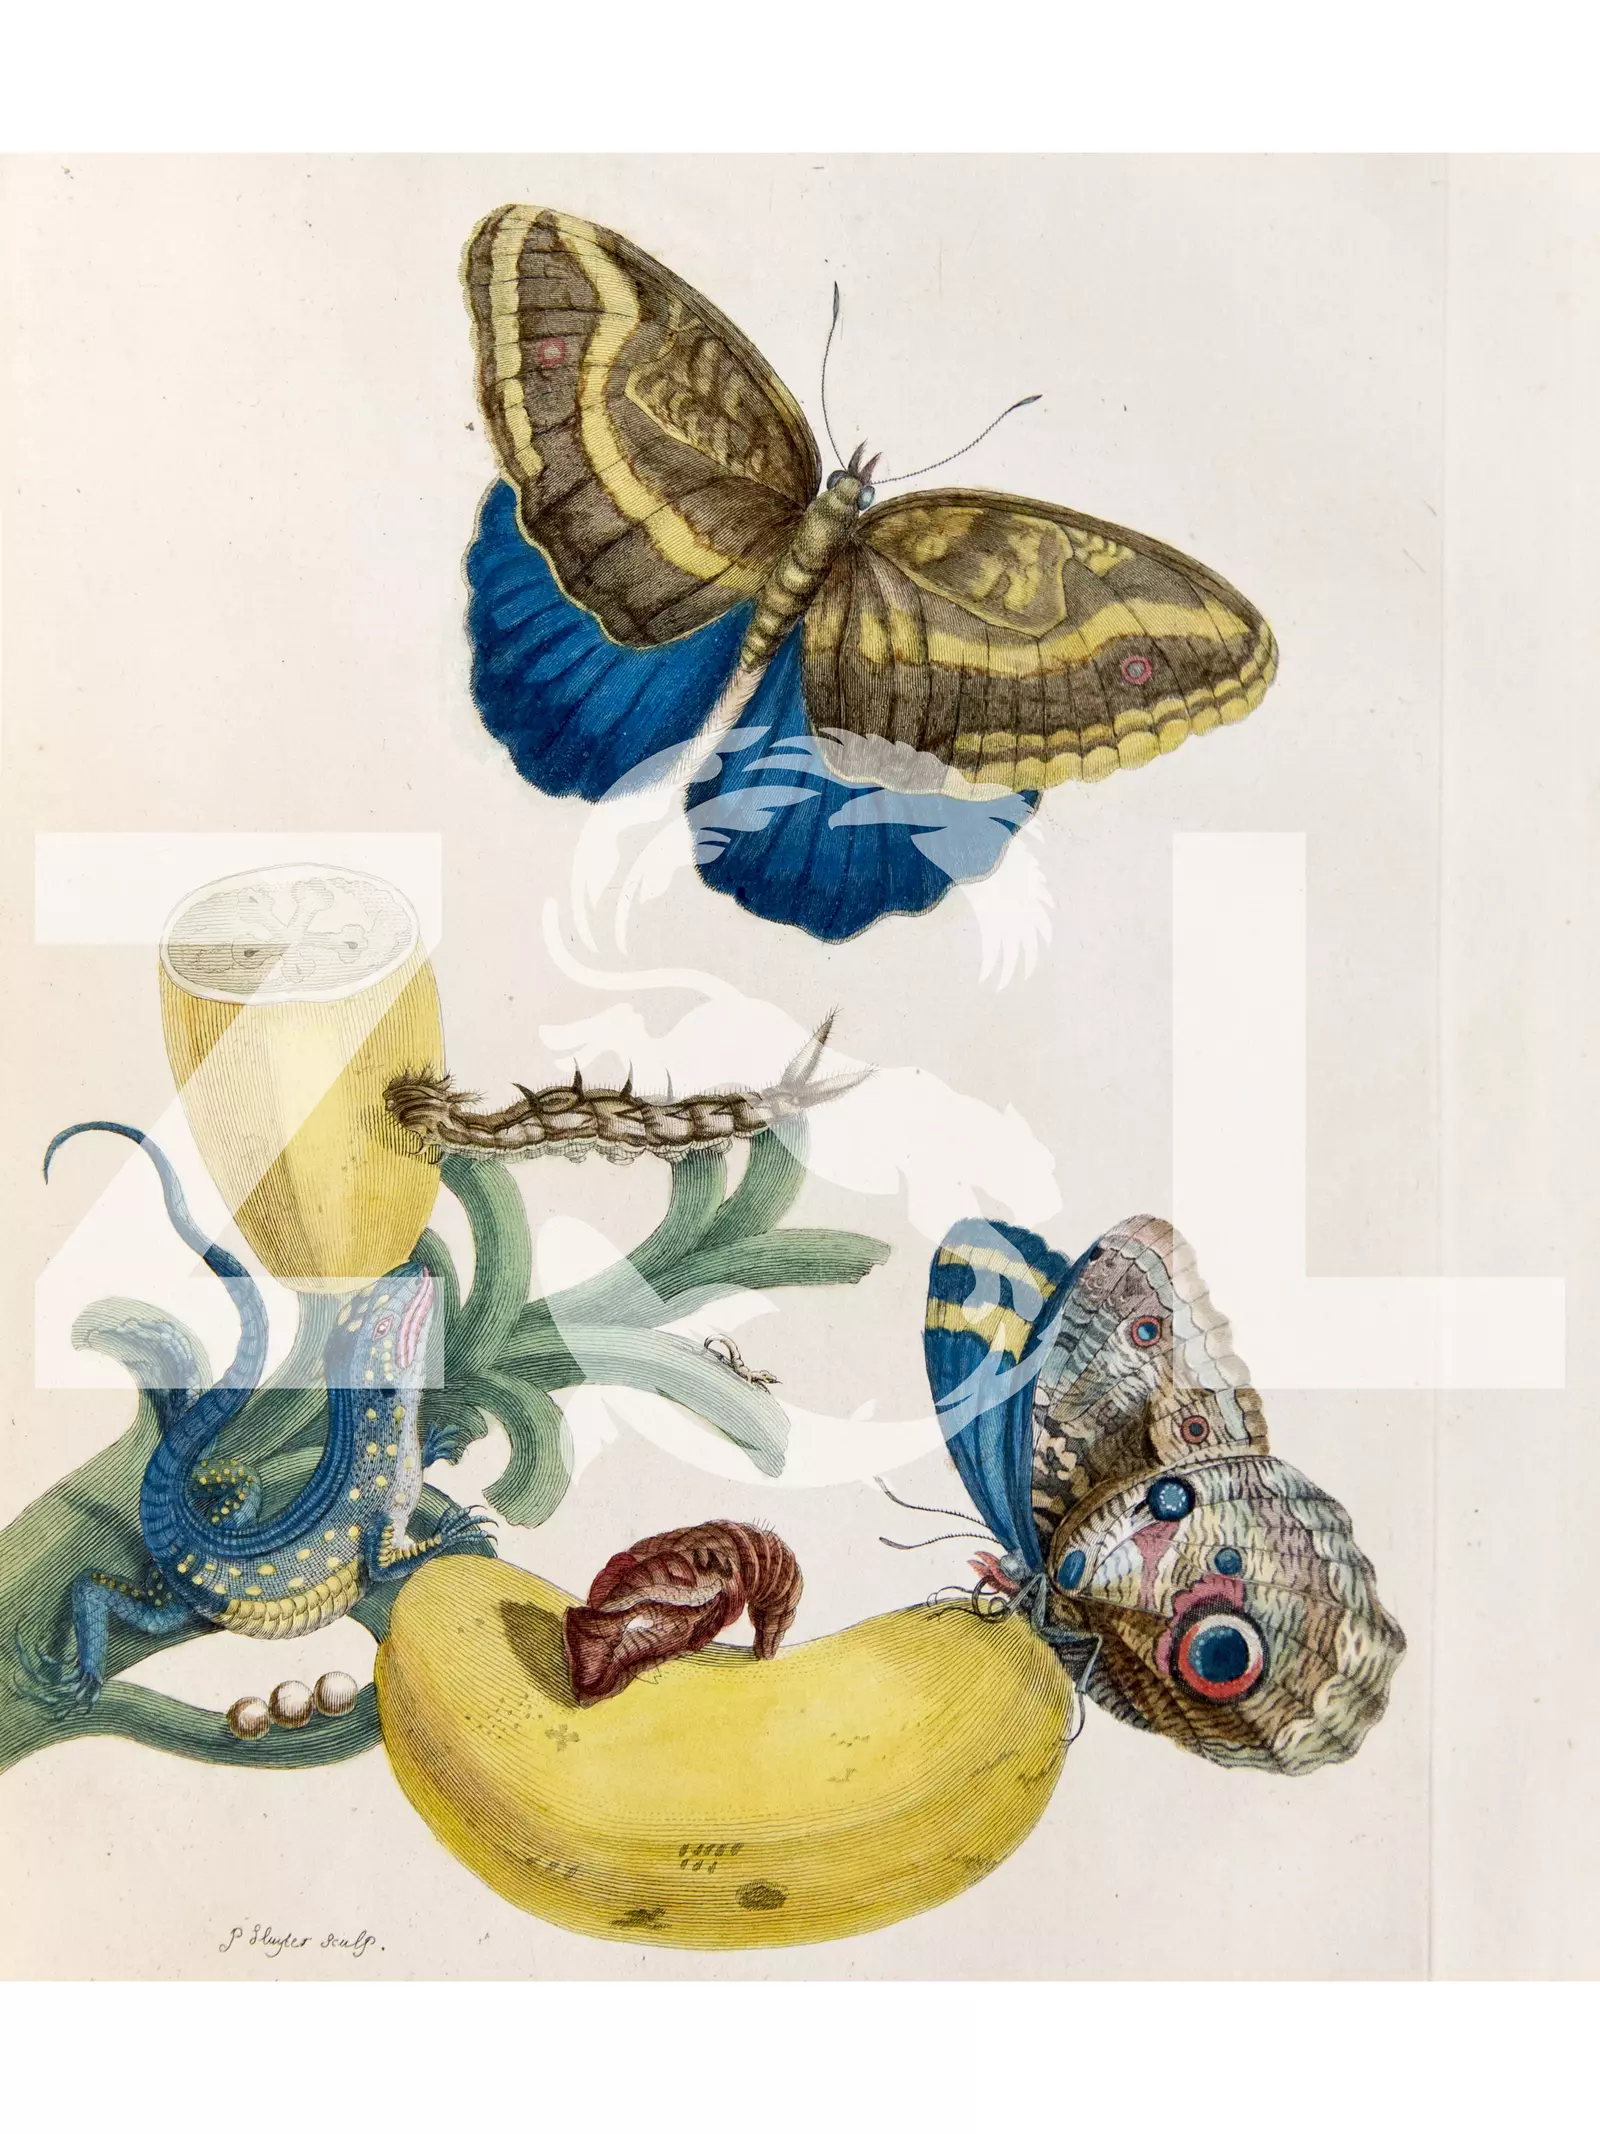 Engraving of Banana with teucer owl butterfly and rainbow whiptail lizard in Maria Merian's 'Dissertation sur la génération et les transformations des insectes de Suriname...', 1726.